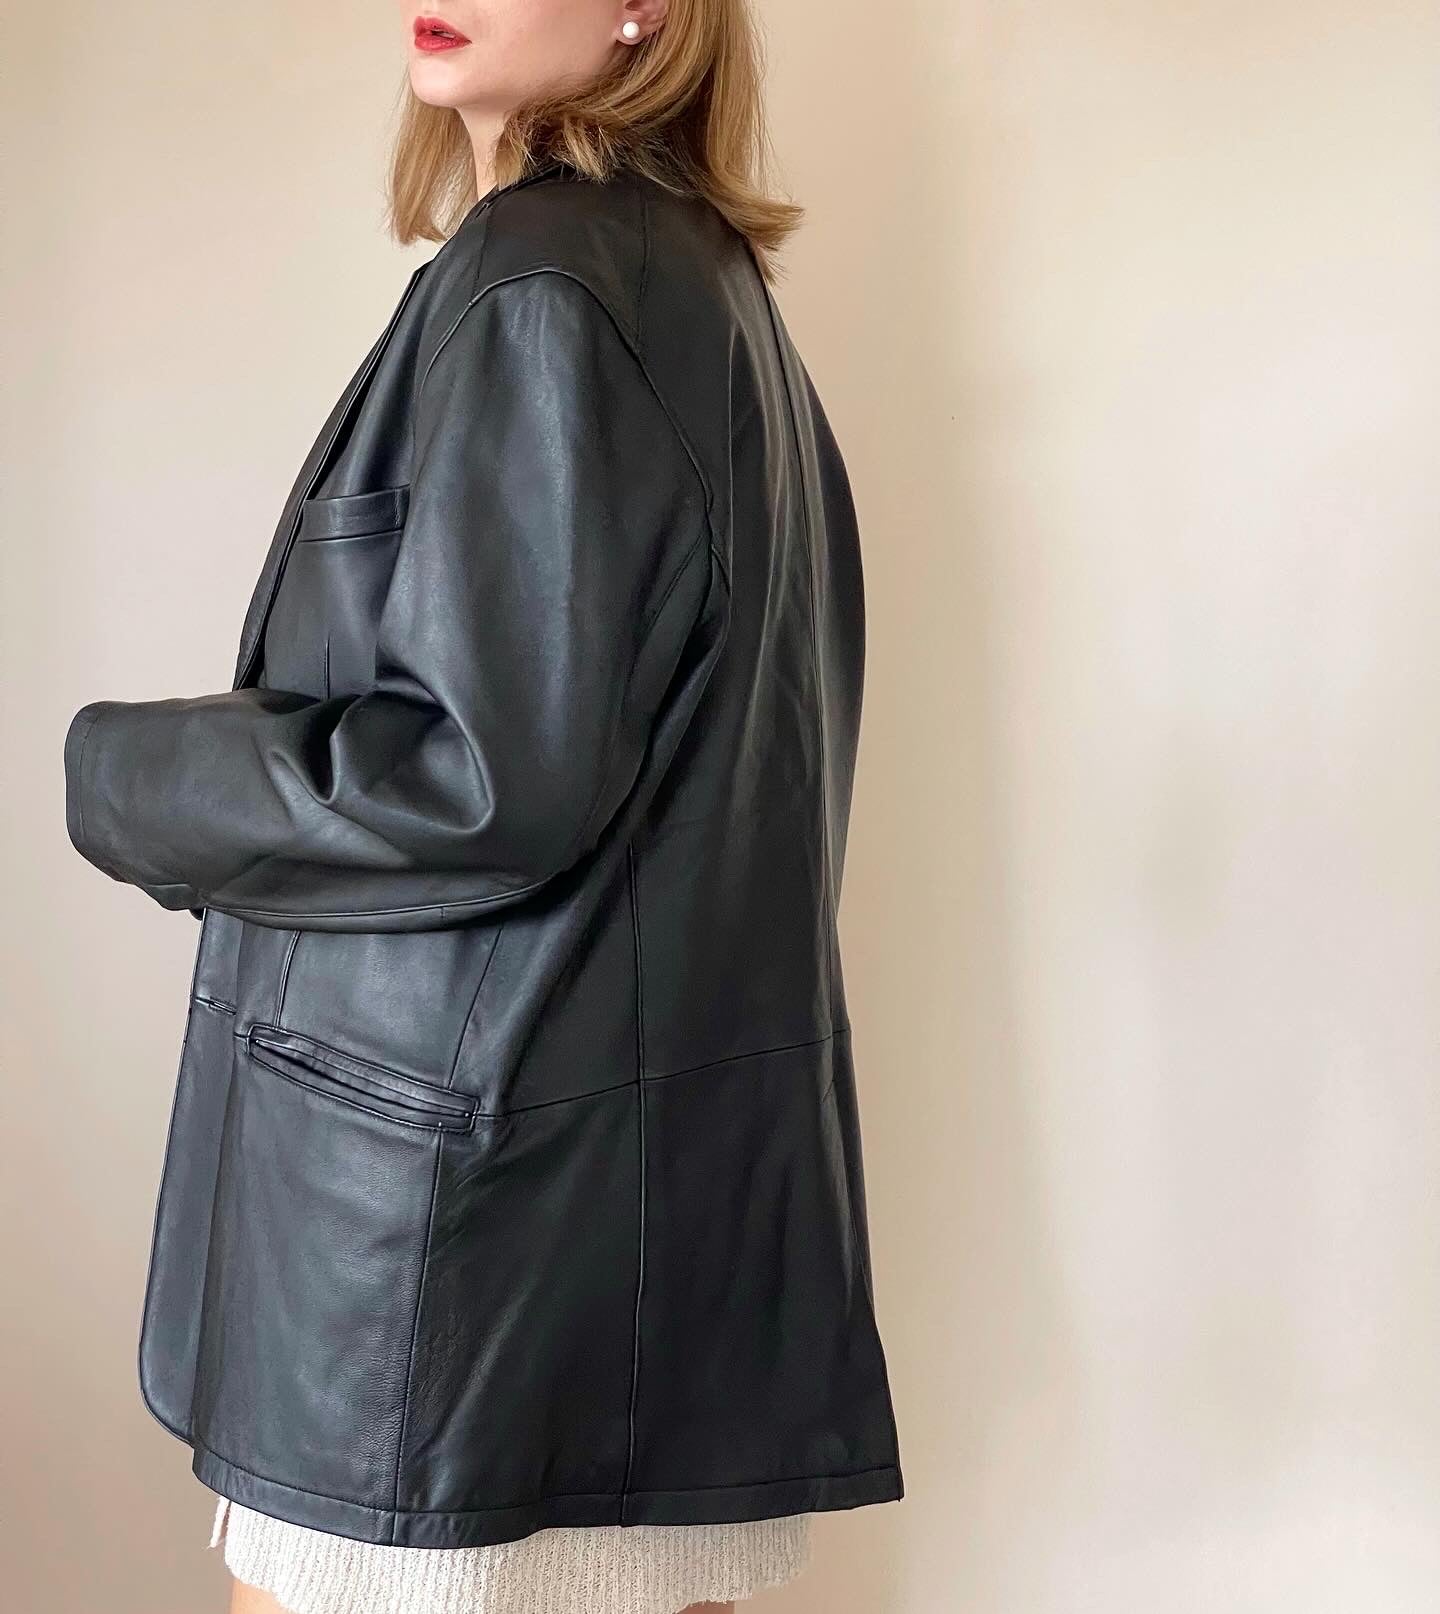 Stunning vintage oversized leather jacket Columbia